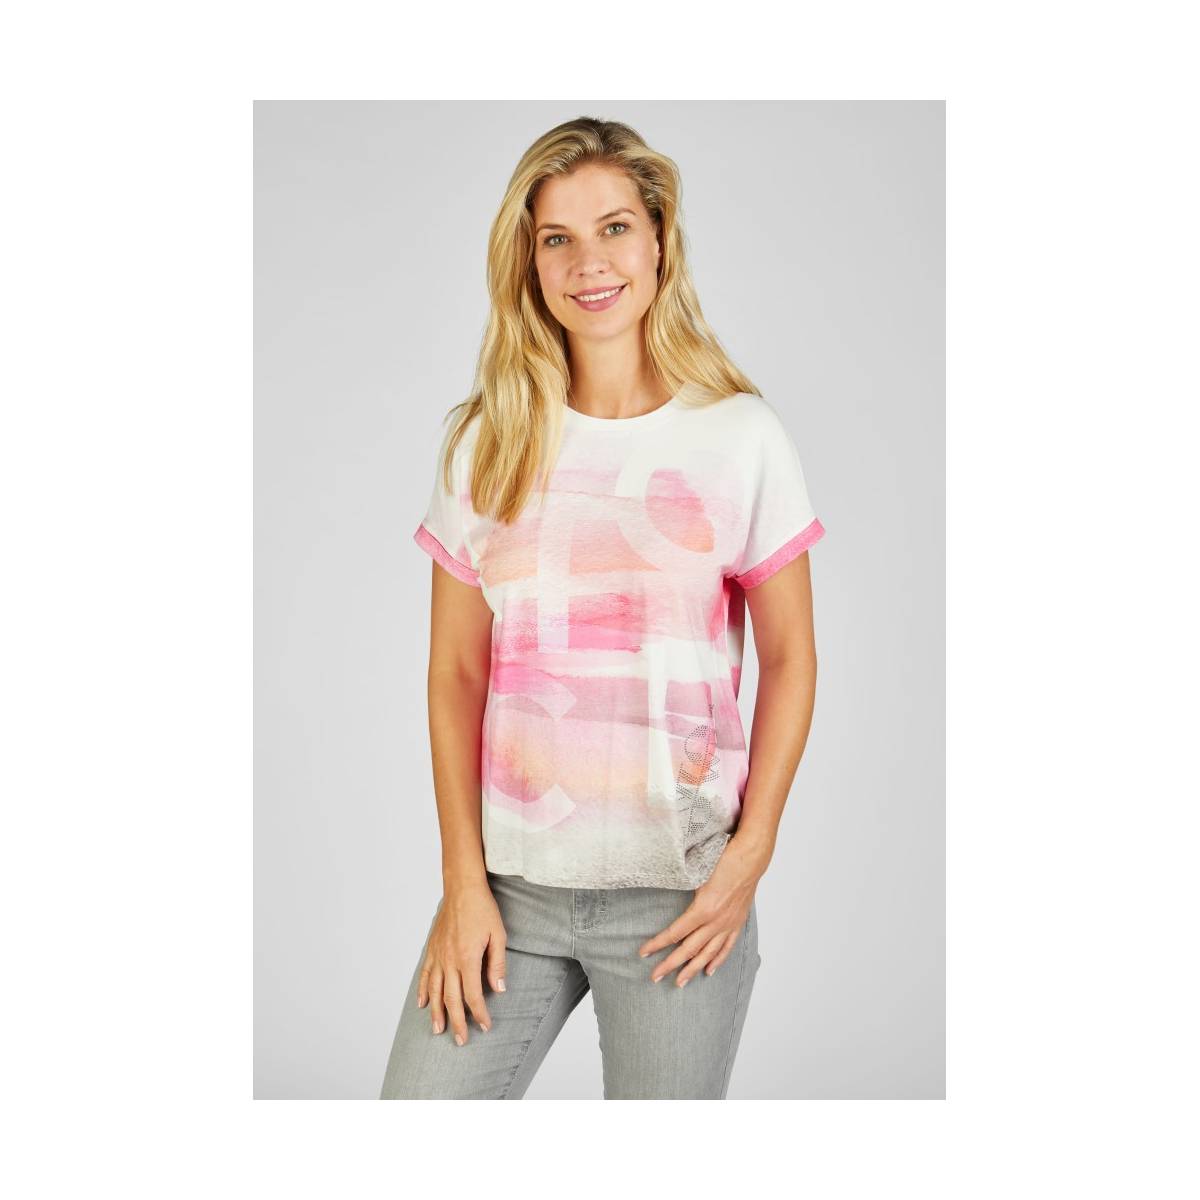 RABE  t shirts donker roze -  model 52-213352 - Dameskleding t shirts roze